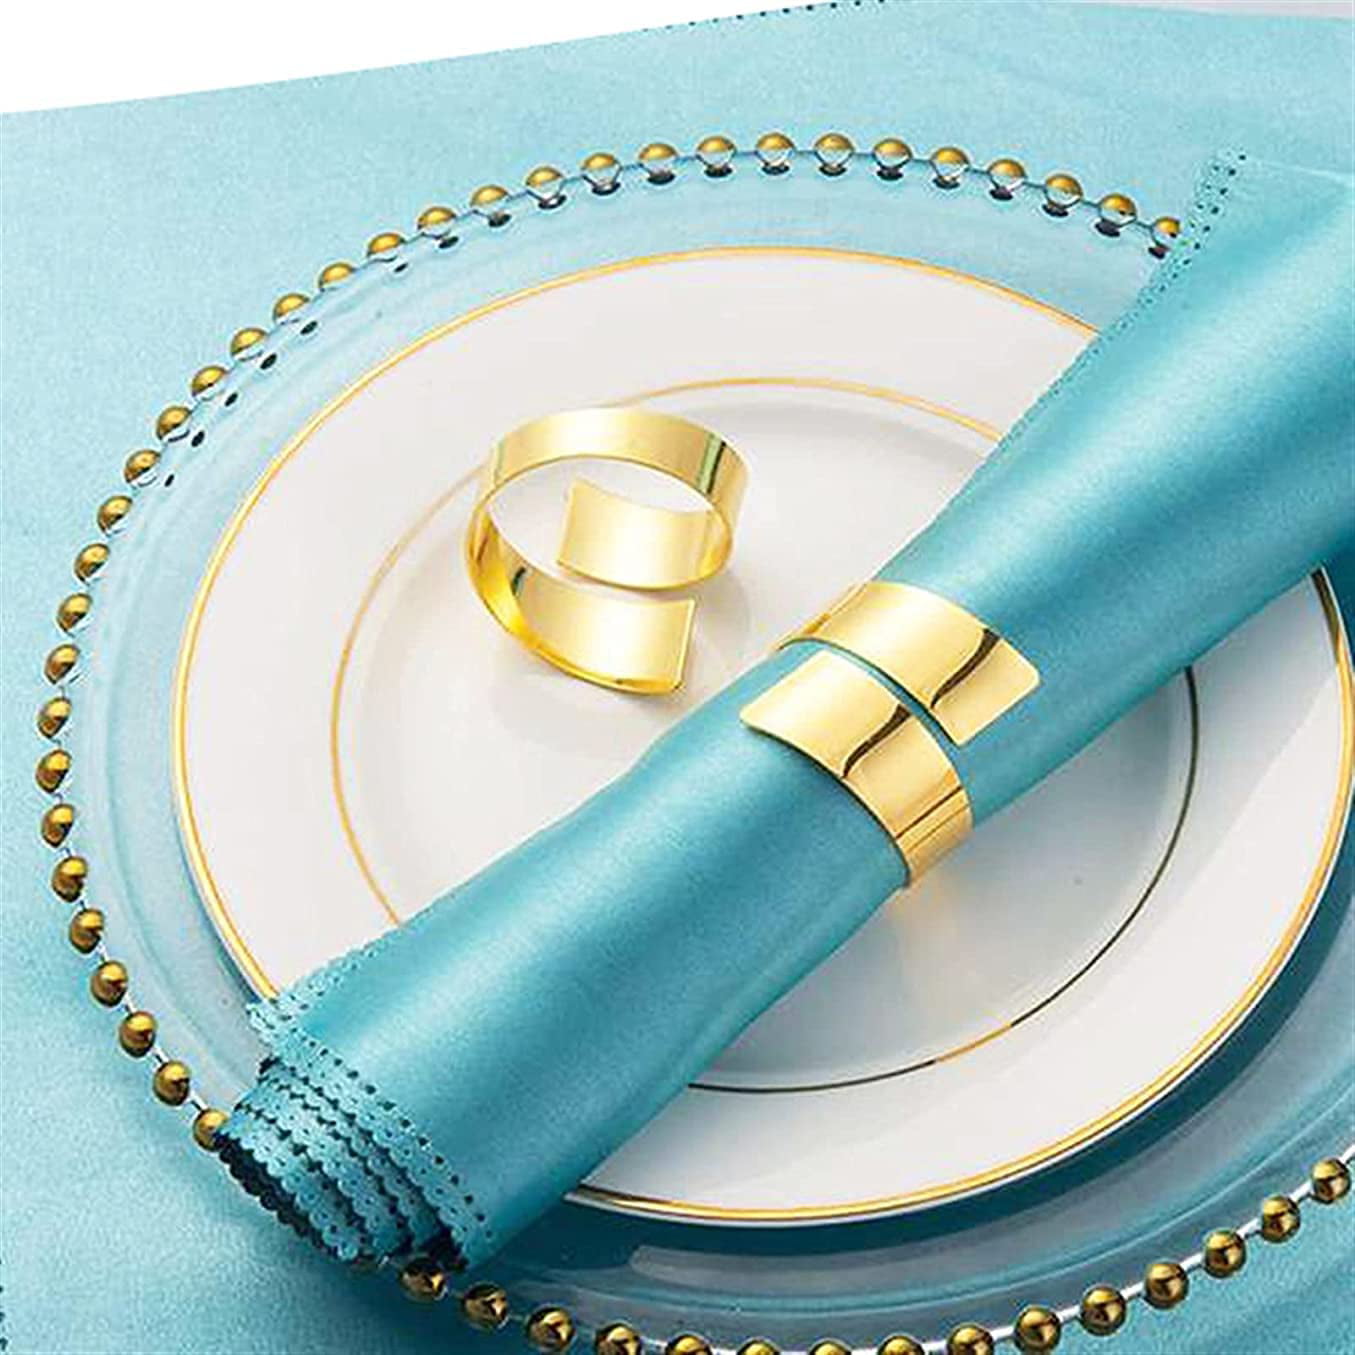 10PCS Napkin Rings Wedding Banquet Table Decor Mesh Wrap Napkin Ring Holders New 